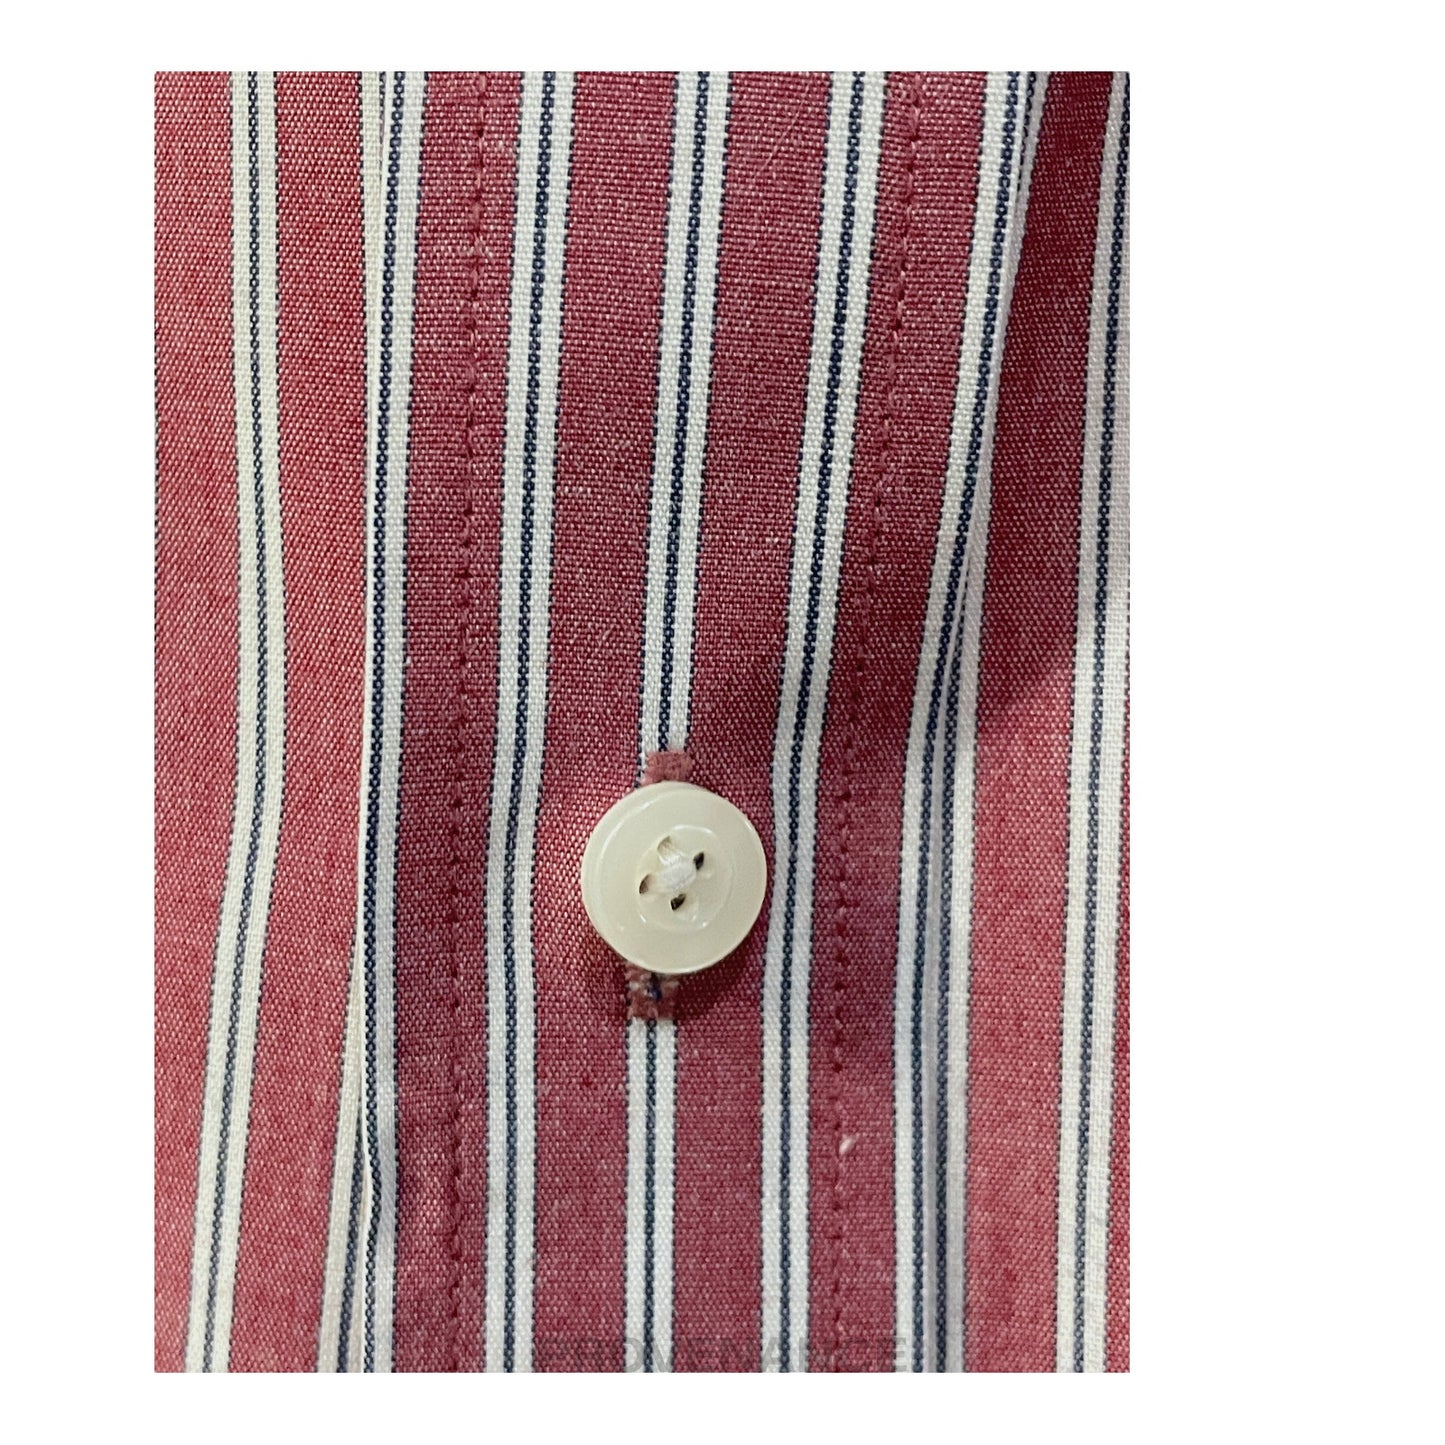 🔴 Balmain Button Down Shirt - Red/White Striped